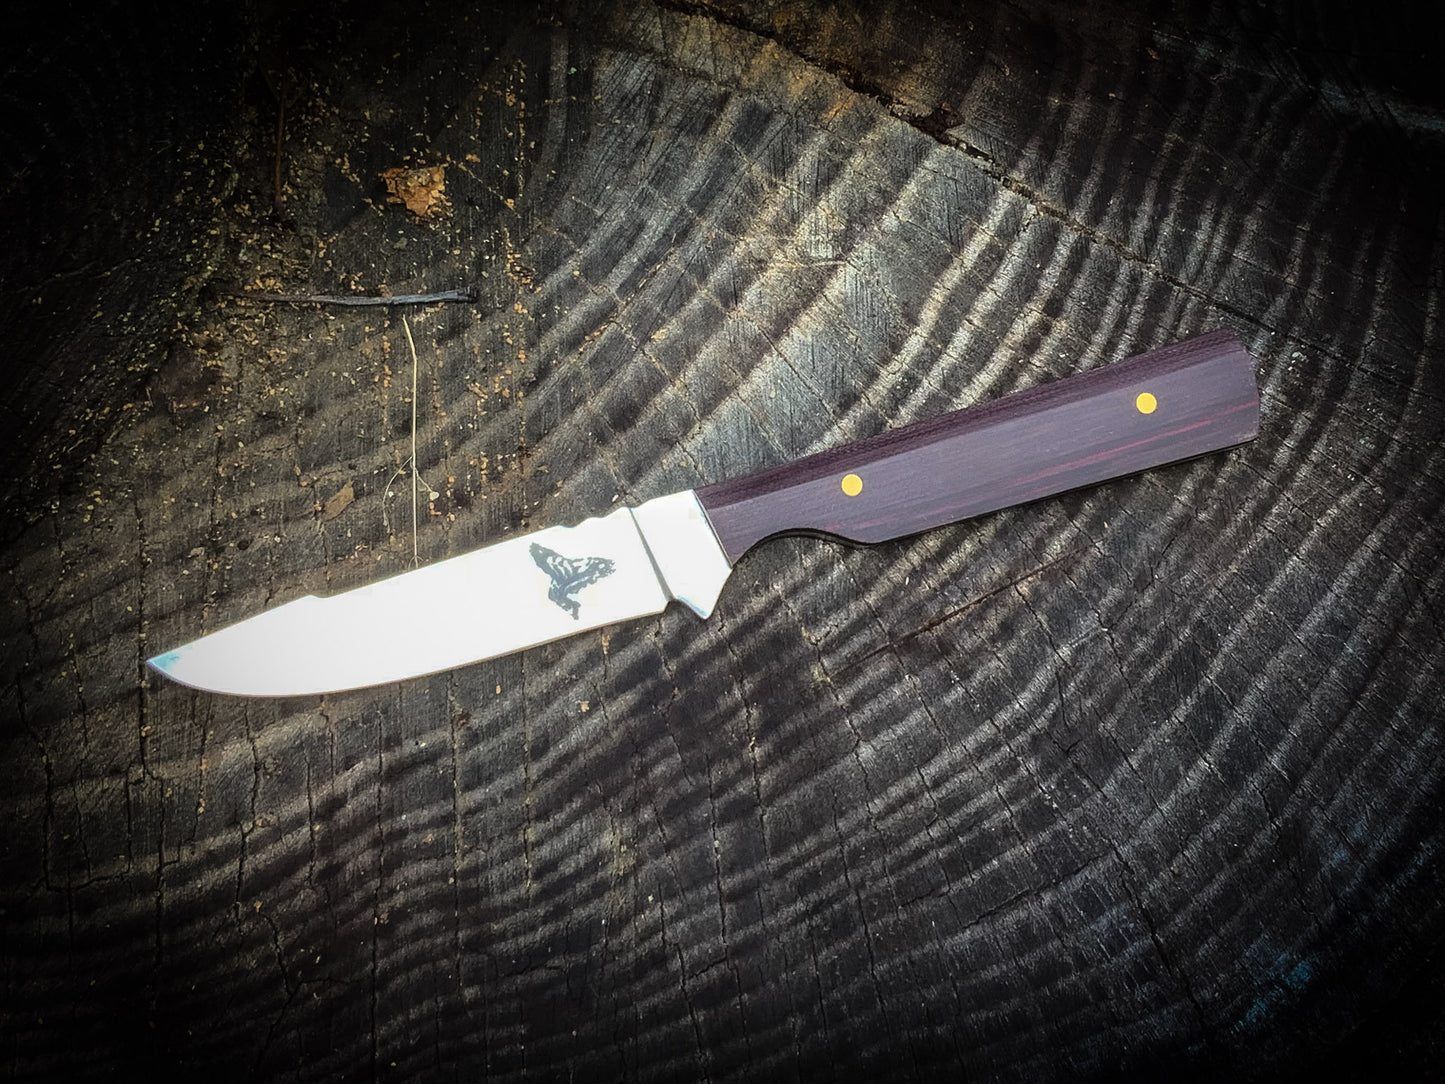 Bonds Creek Knives Fin & Feather